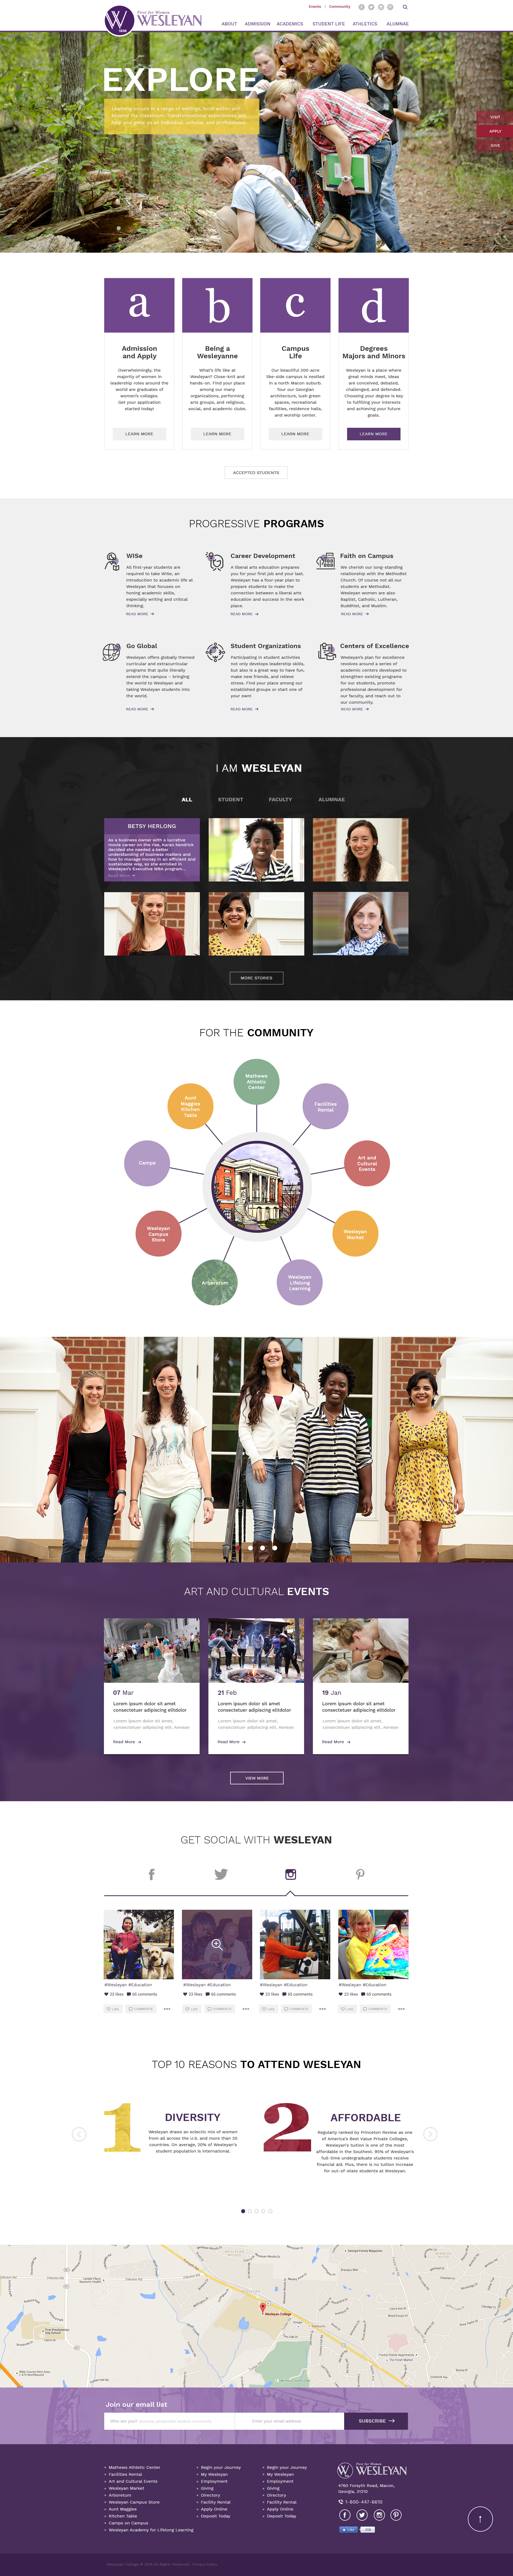 Wesleyan College - 1 Homepage Design - New Minds Group